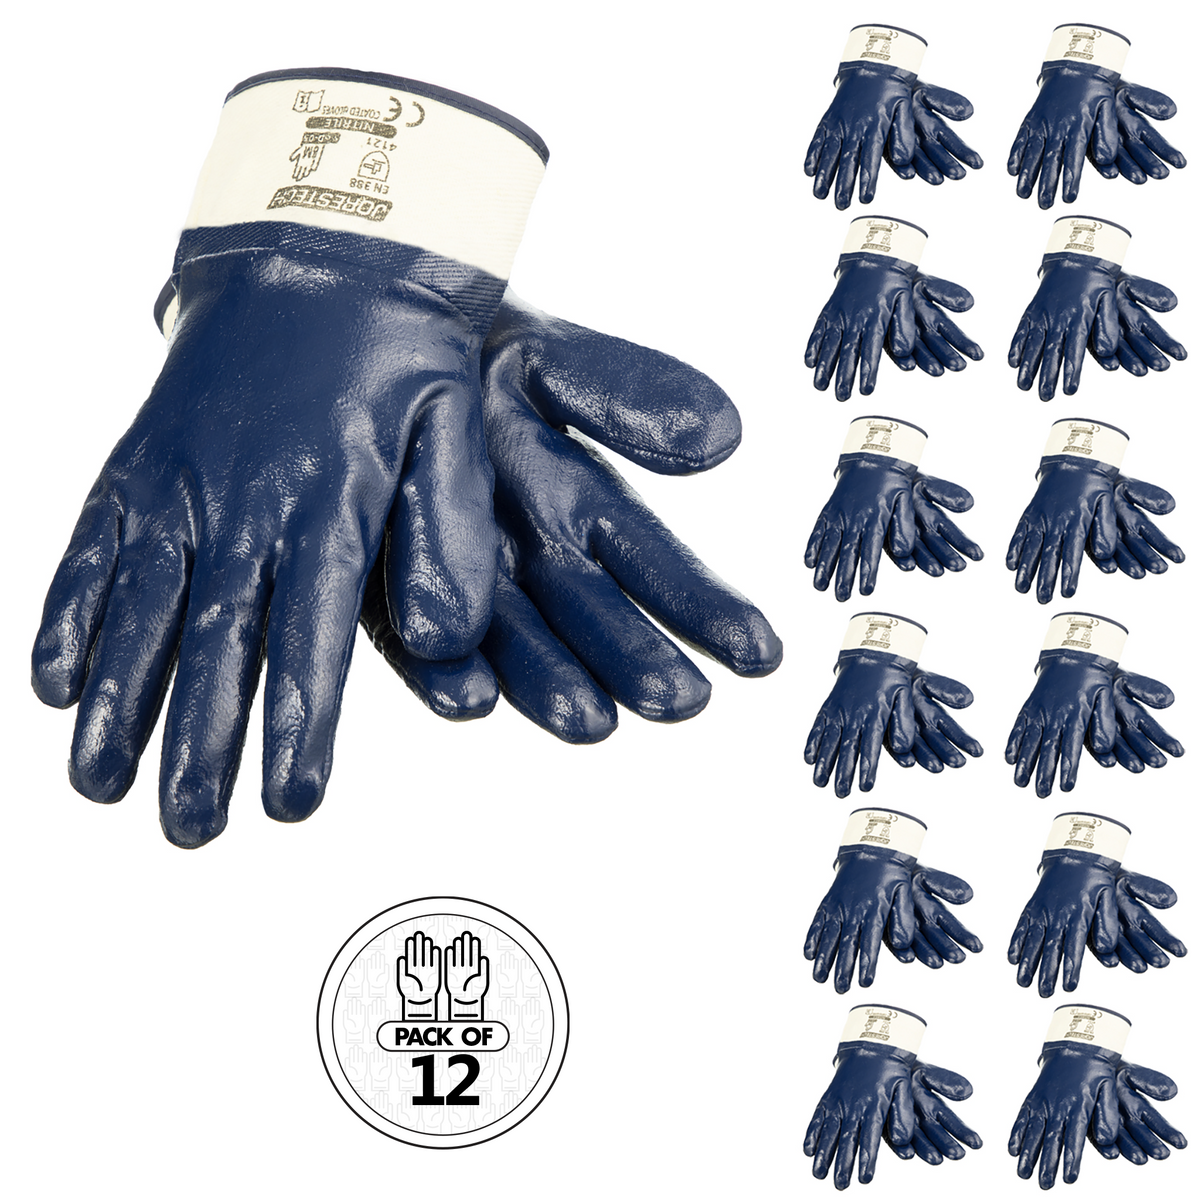 Fully Coated Nitrile Safety Gloves – 12-Pack